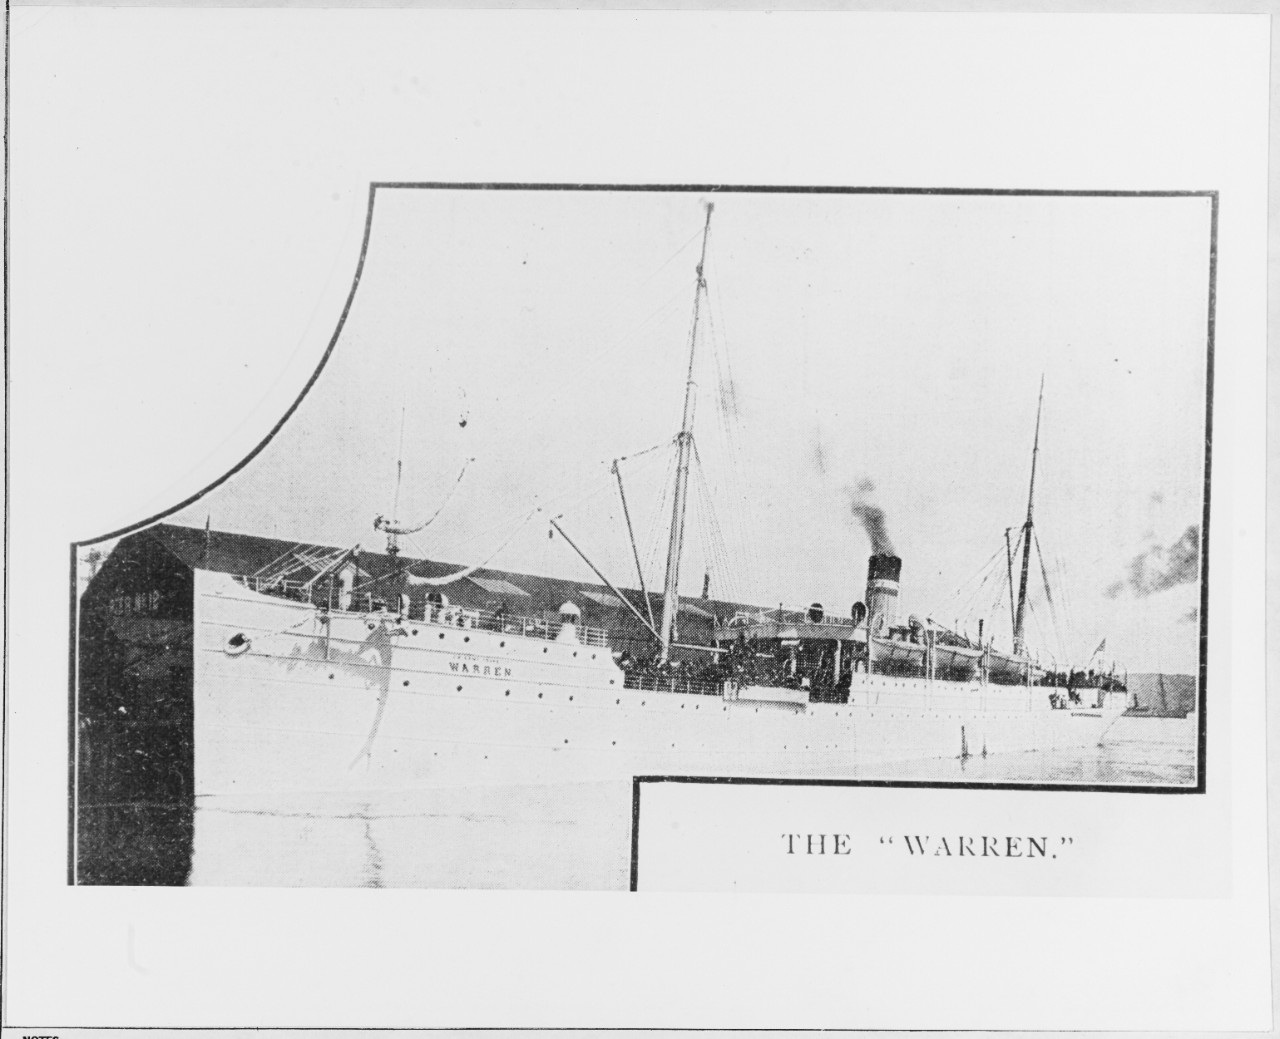 U.S. transport WARREN, 1898.